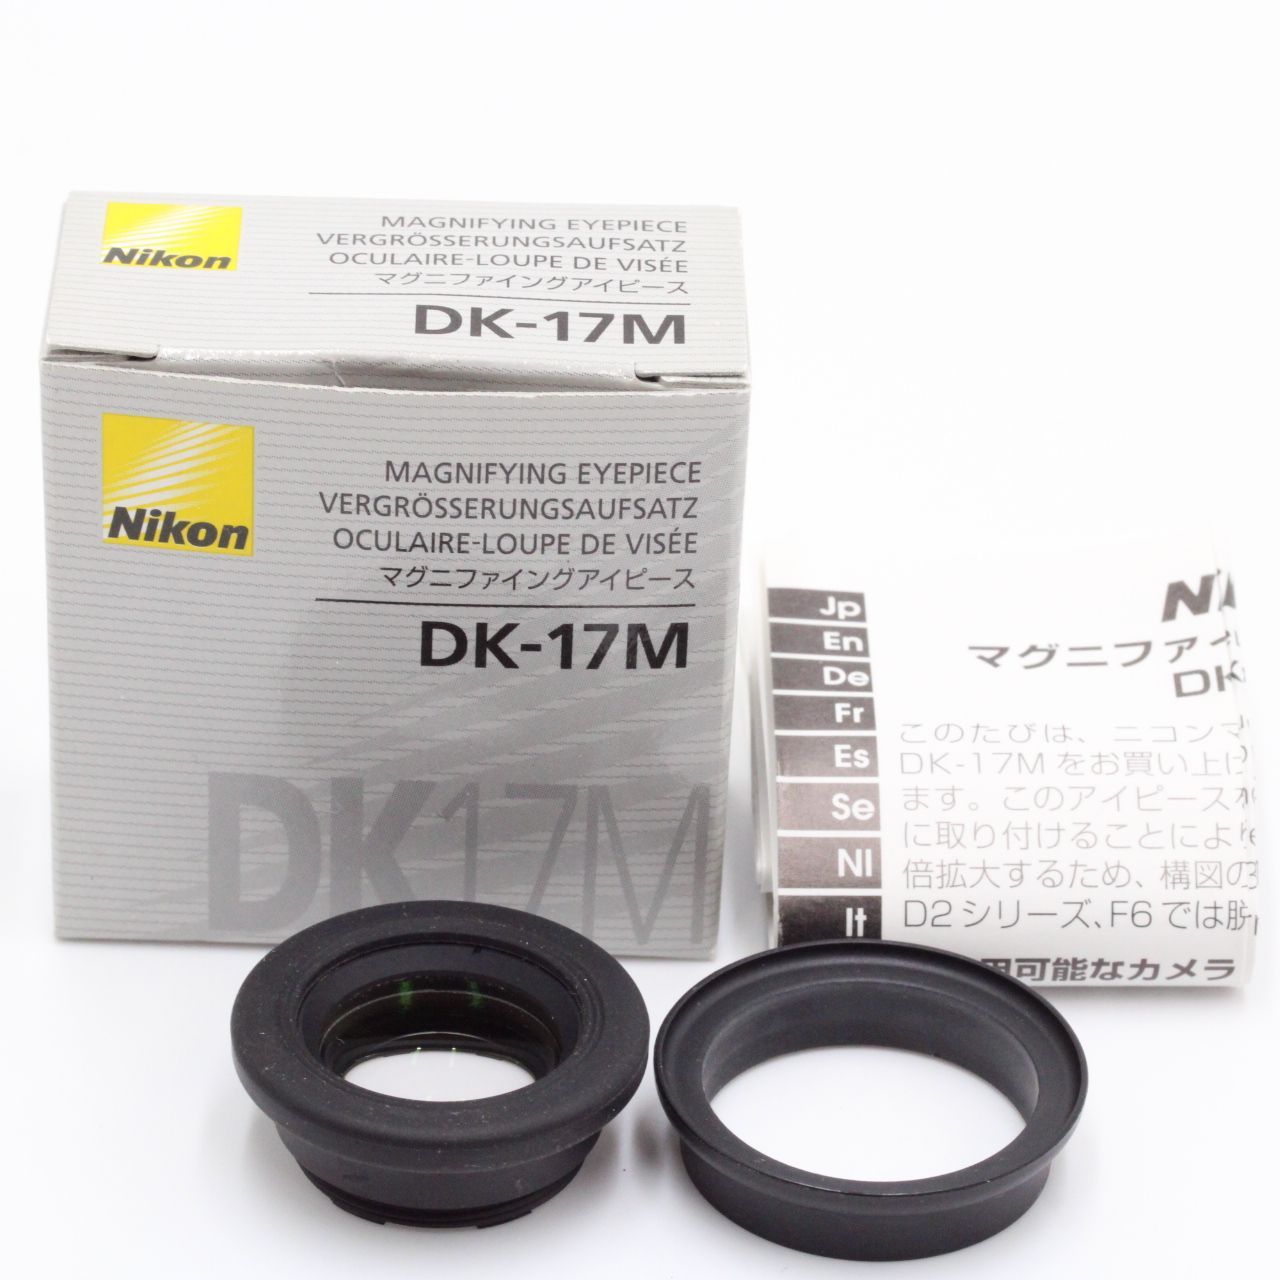 Nikon DK-17M マグニアイピース